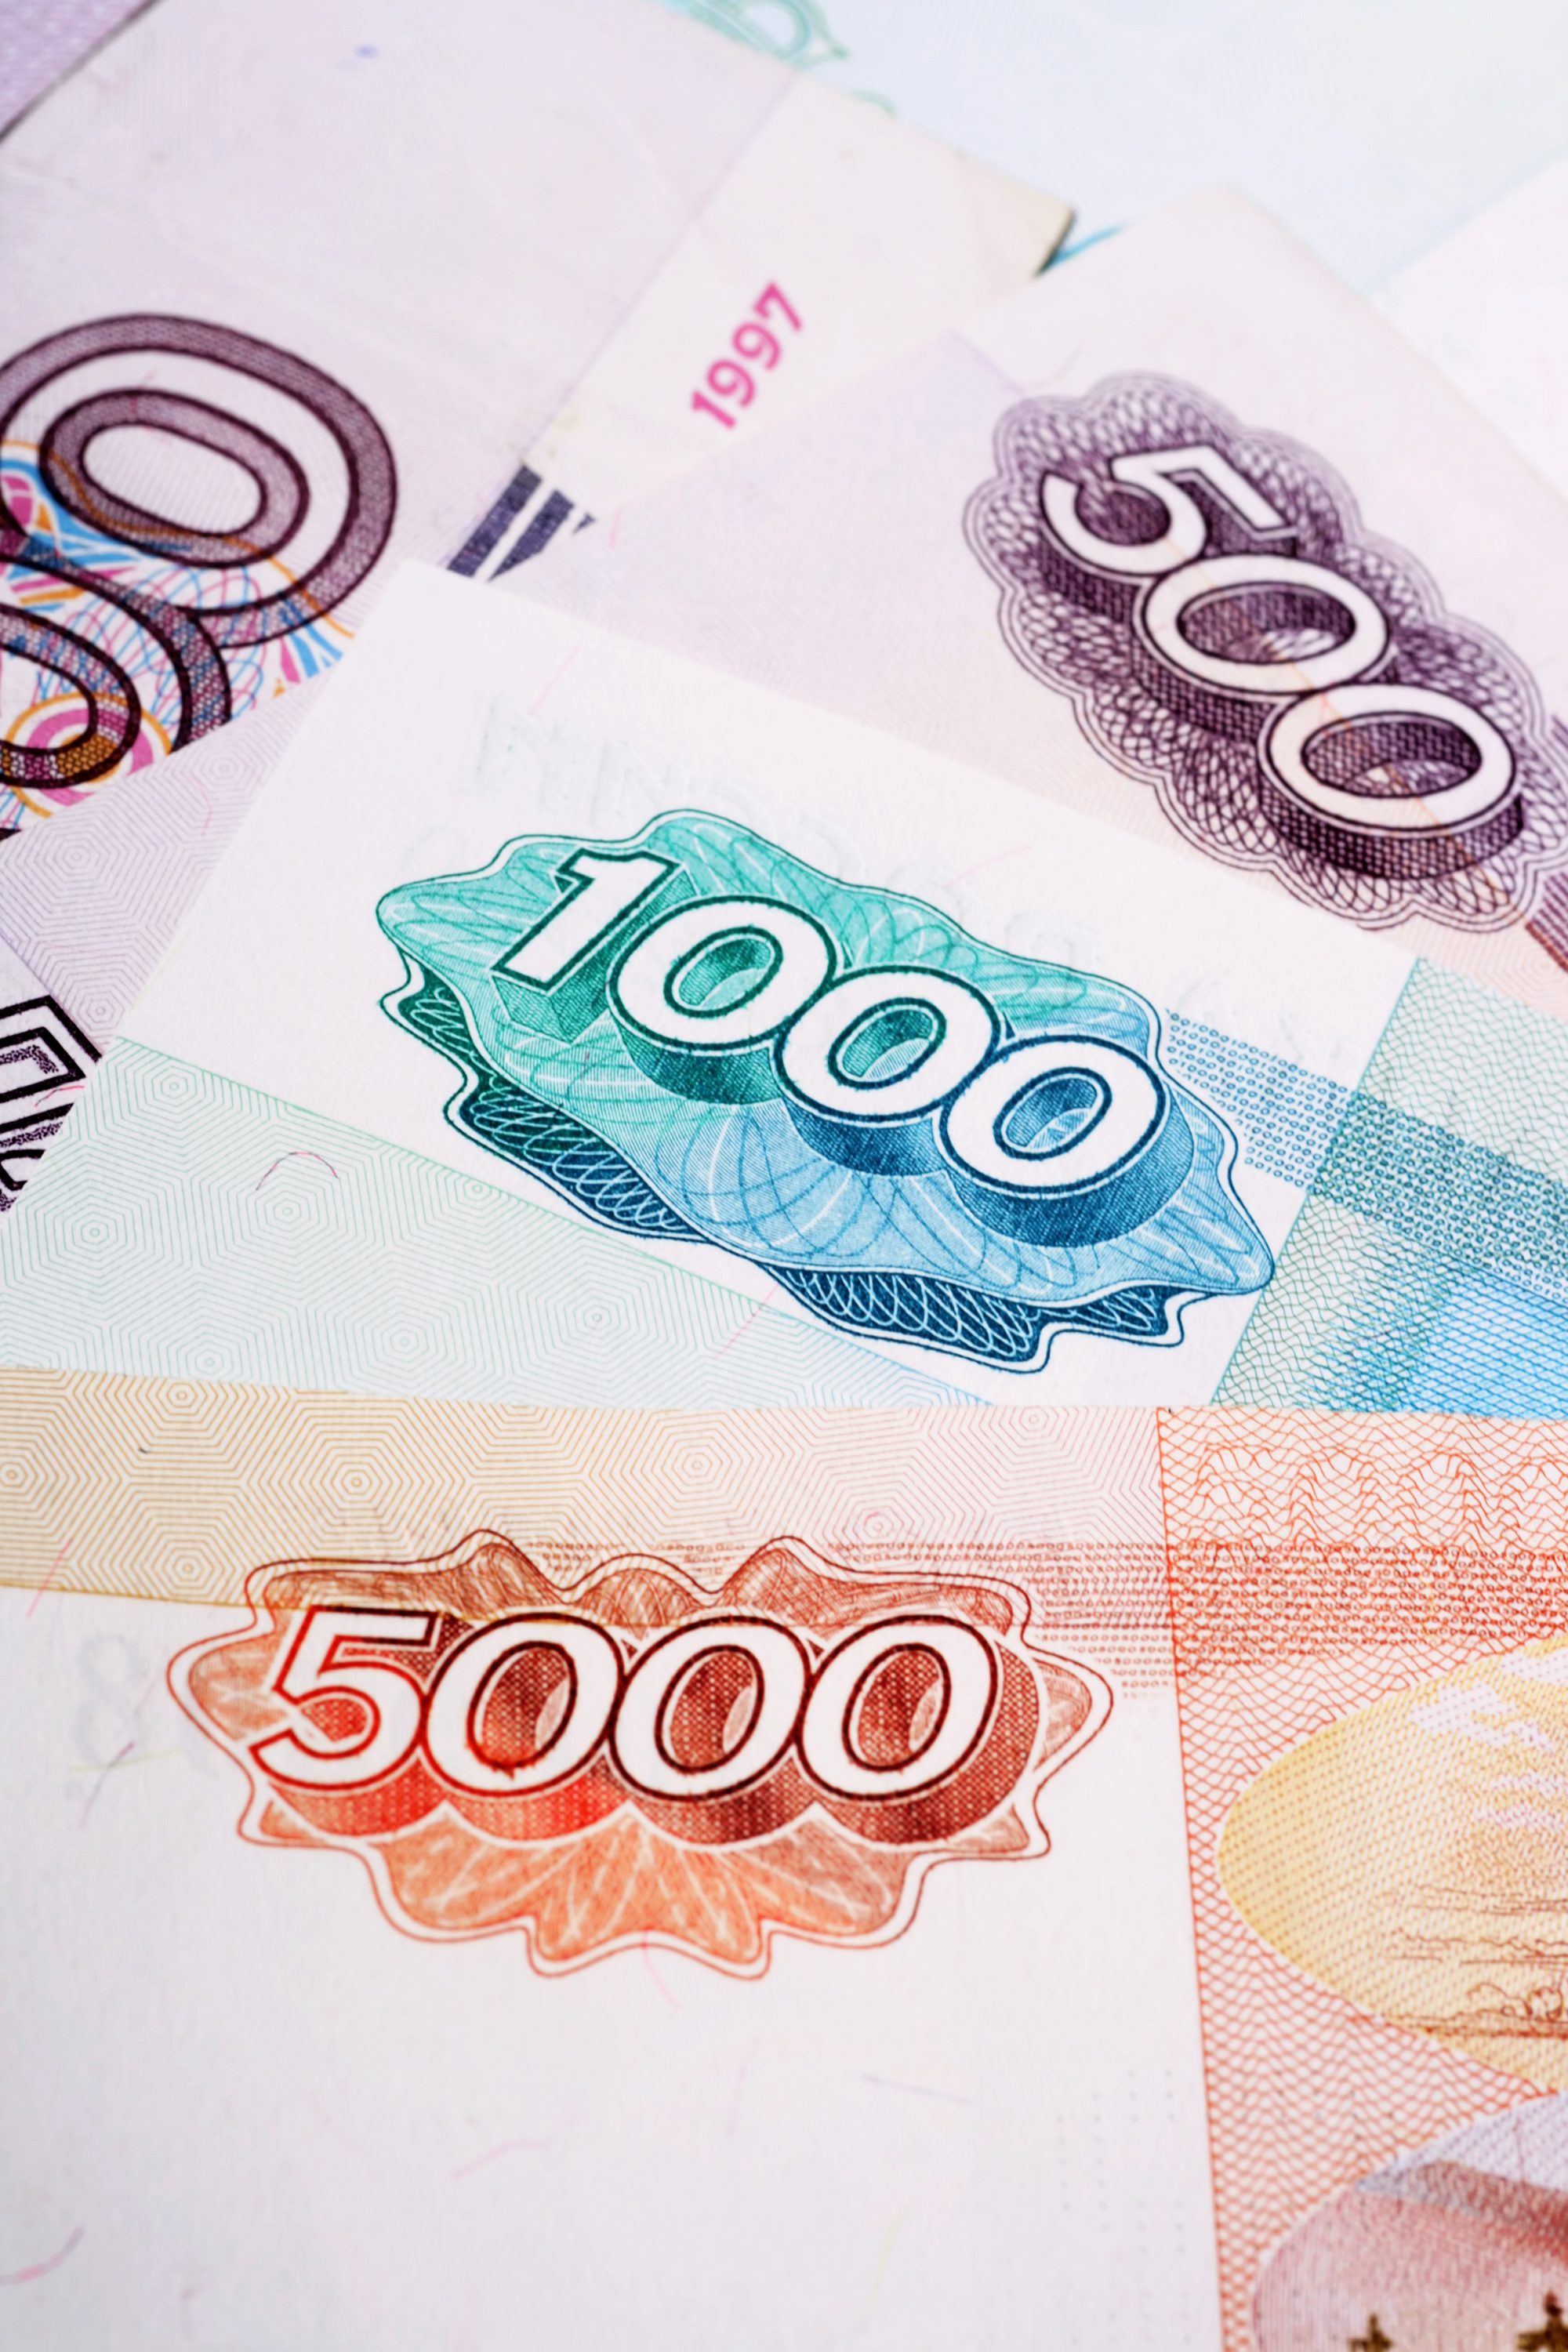 Russian banknotes photo